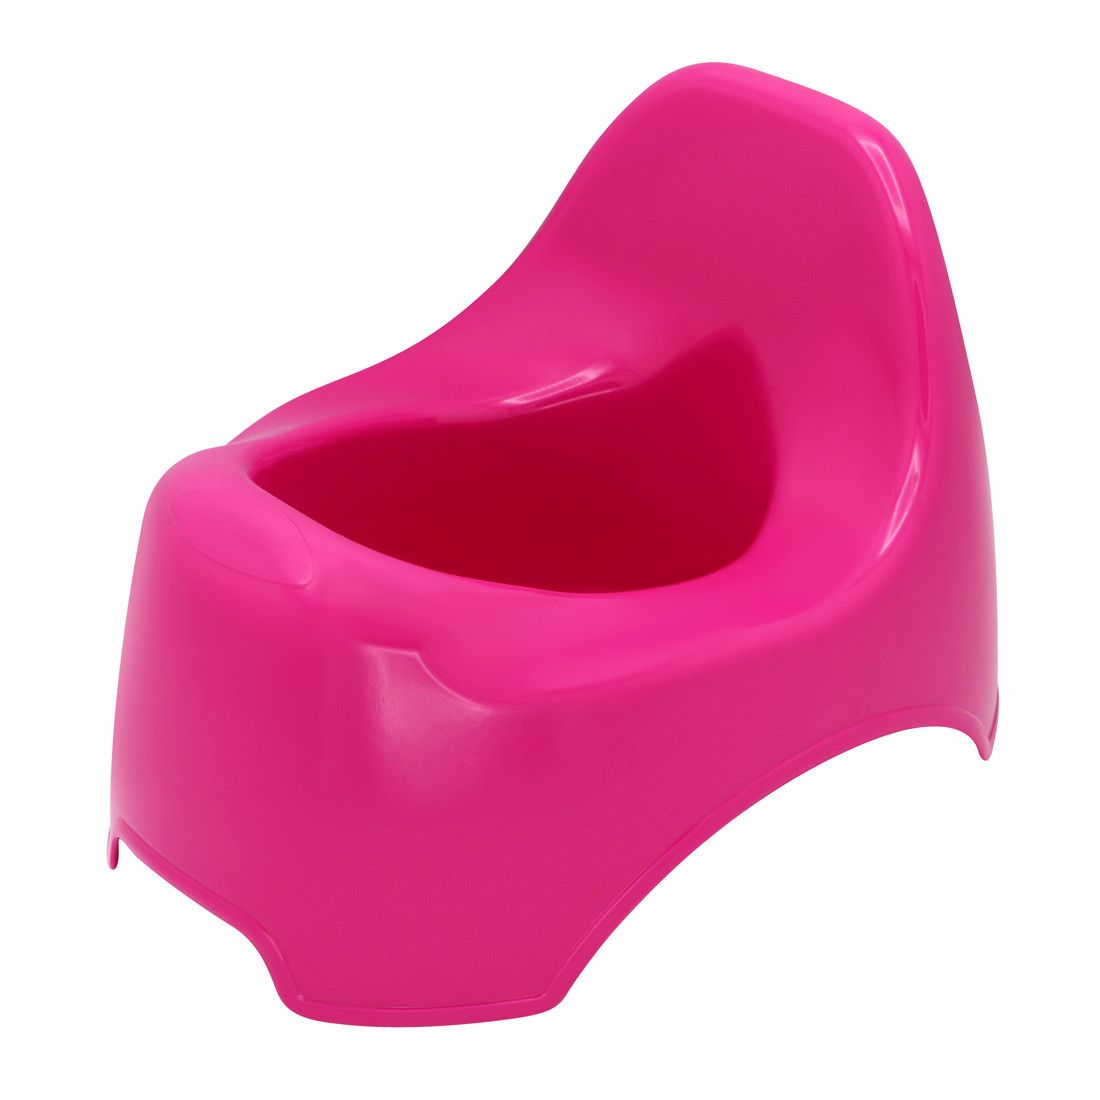 Горщик дитячий пластиковий Горизонт рожевий - купить в магазине Plus-Plus по цене 137 грн.